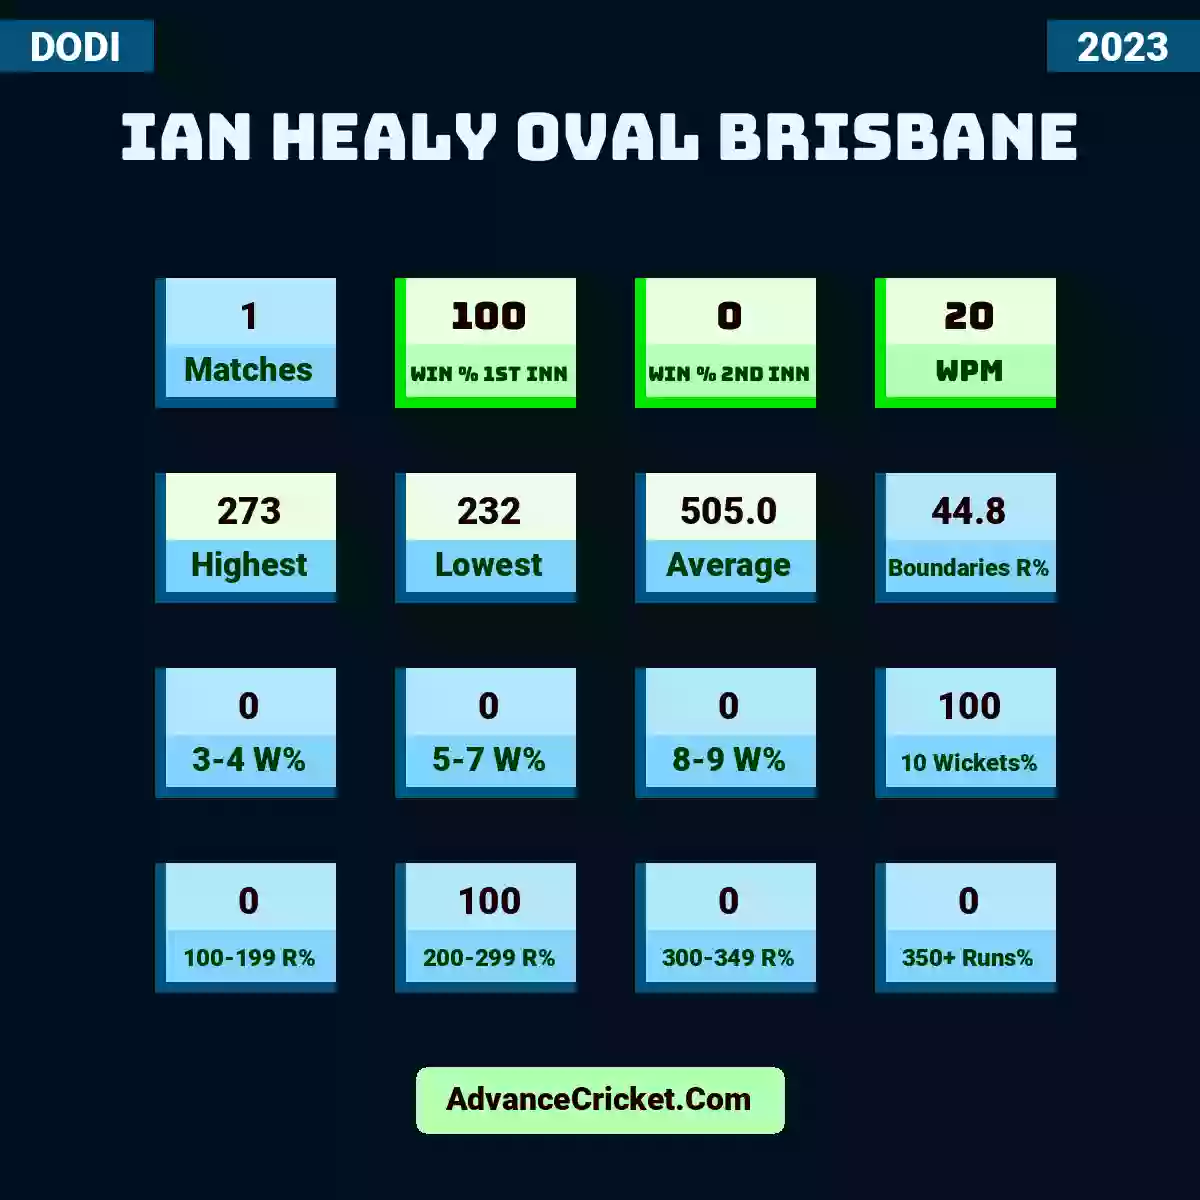 Image showing Ian Healy Oval Brisbane with Matches: 1, Win % 1st Inn: 100, Win % 2nd Inn: 0, WPM: 20, Highest: 273, Lowest: 232, Average: 505.0, Boundaries R%: 44.8, 3-4 W%: 0, 5-7 W%: 0, 8-9 W%: 0, 10 Wickets%: 100, 100-199 R%: 0, 200-299 R%: 100, 300-349 R%: 0, 350+ Runs%: 0.